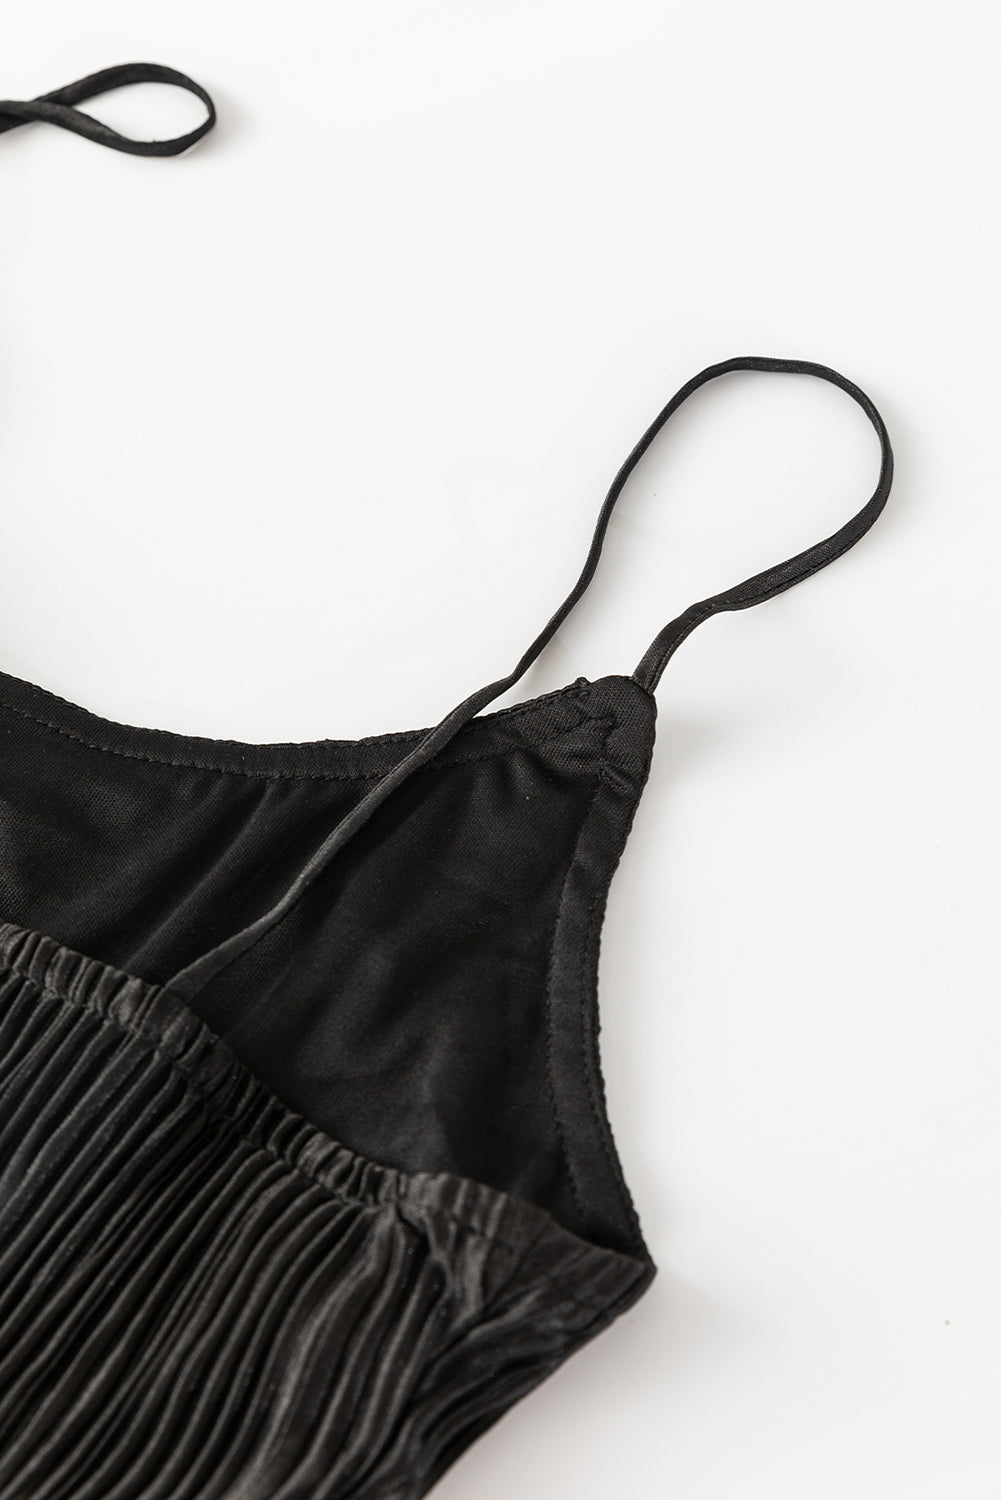 Black Spaghetti Straps Backless Pleated Midi Dress - SELFTRITSS